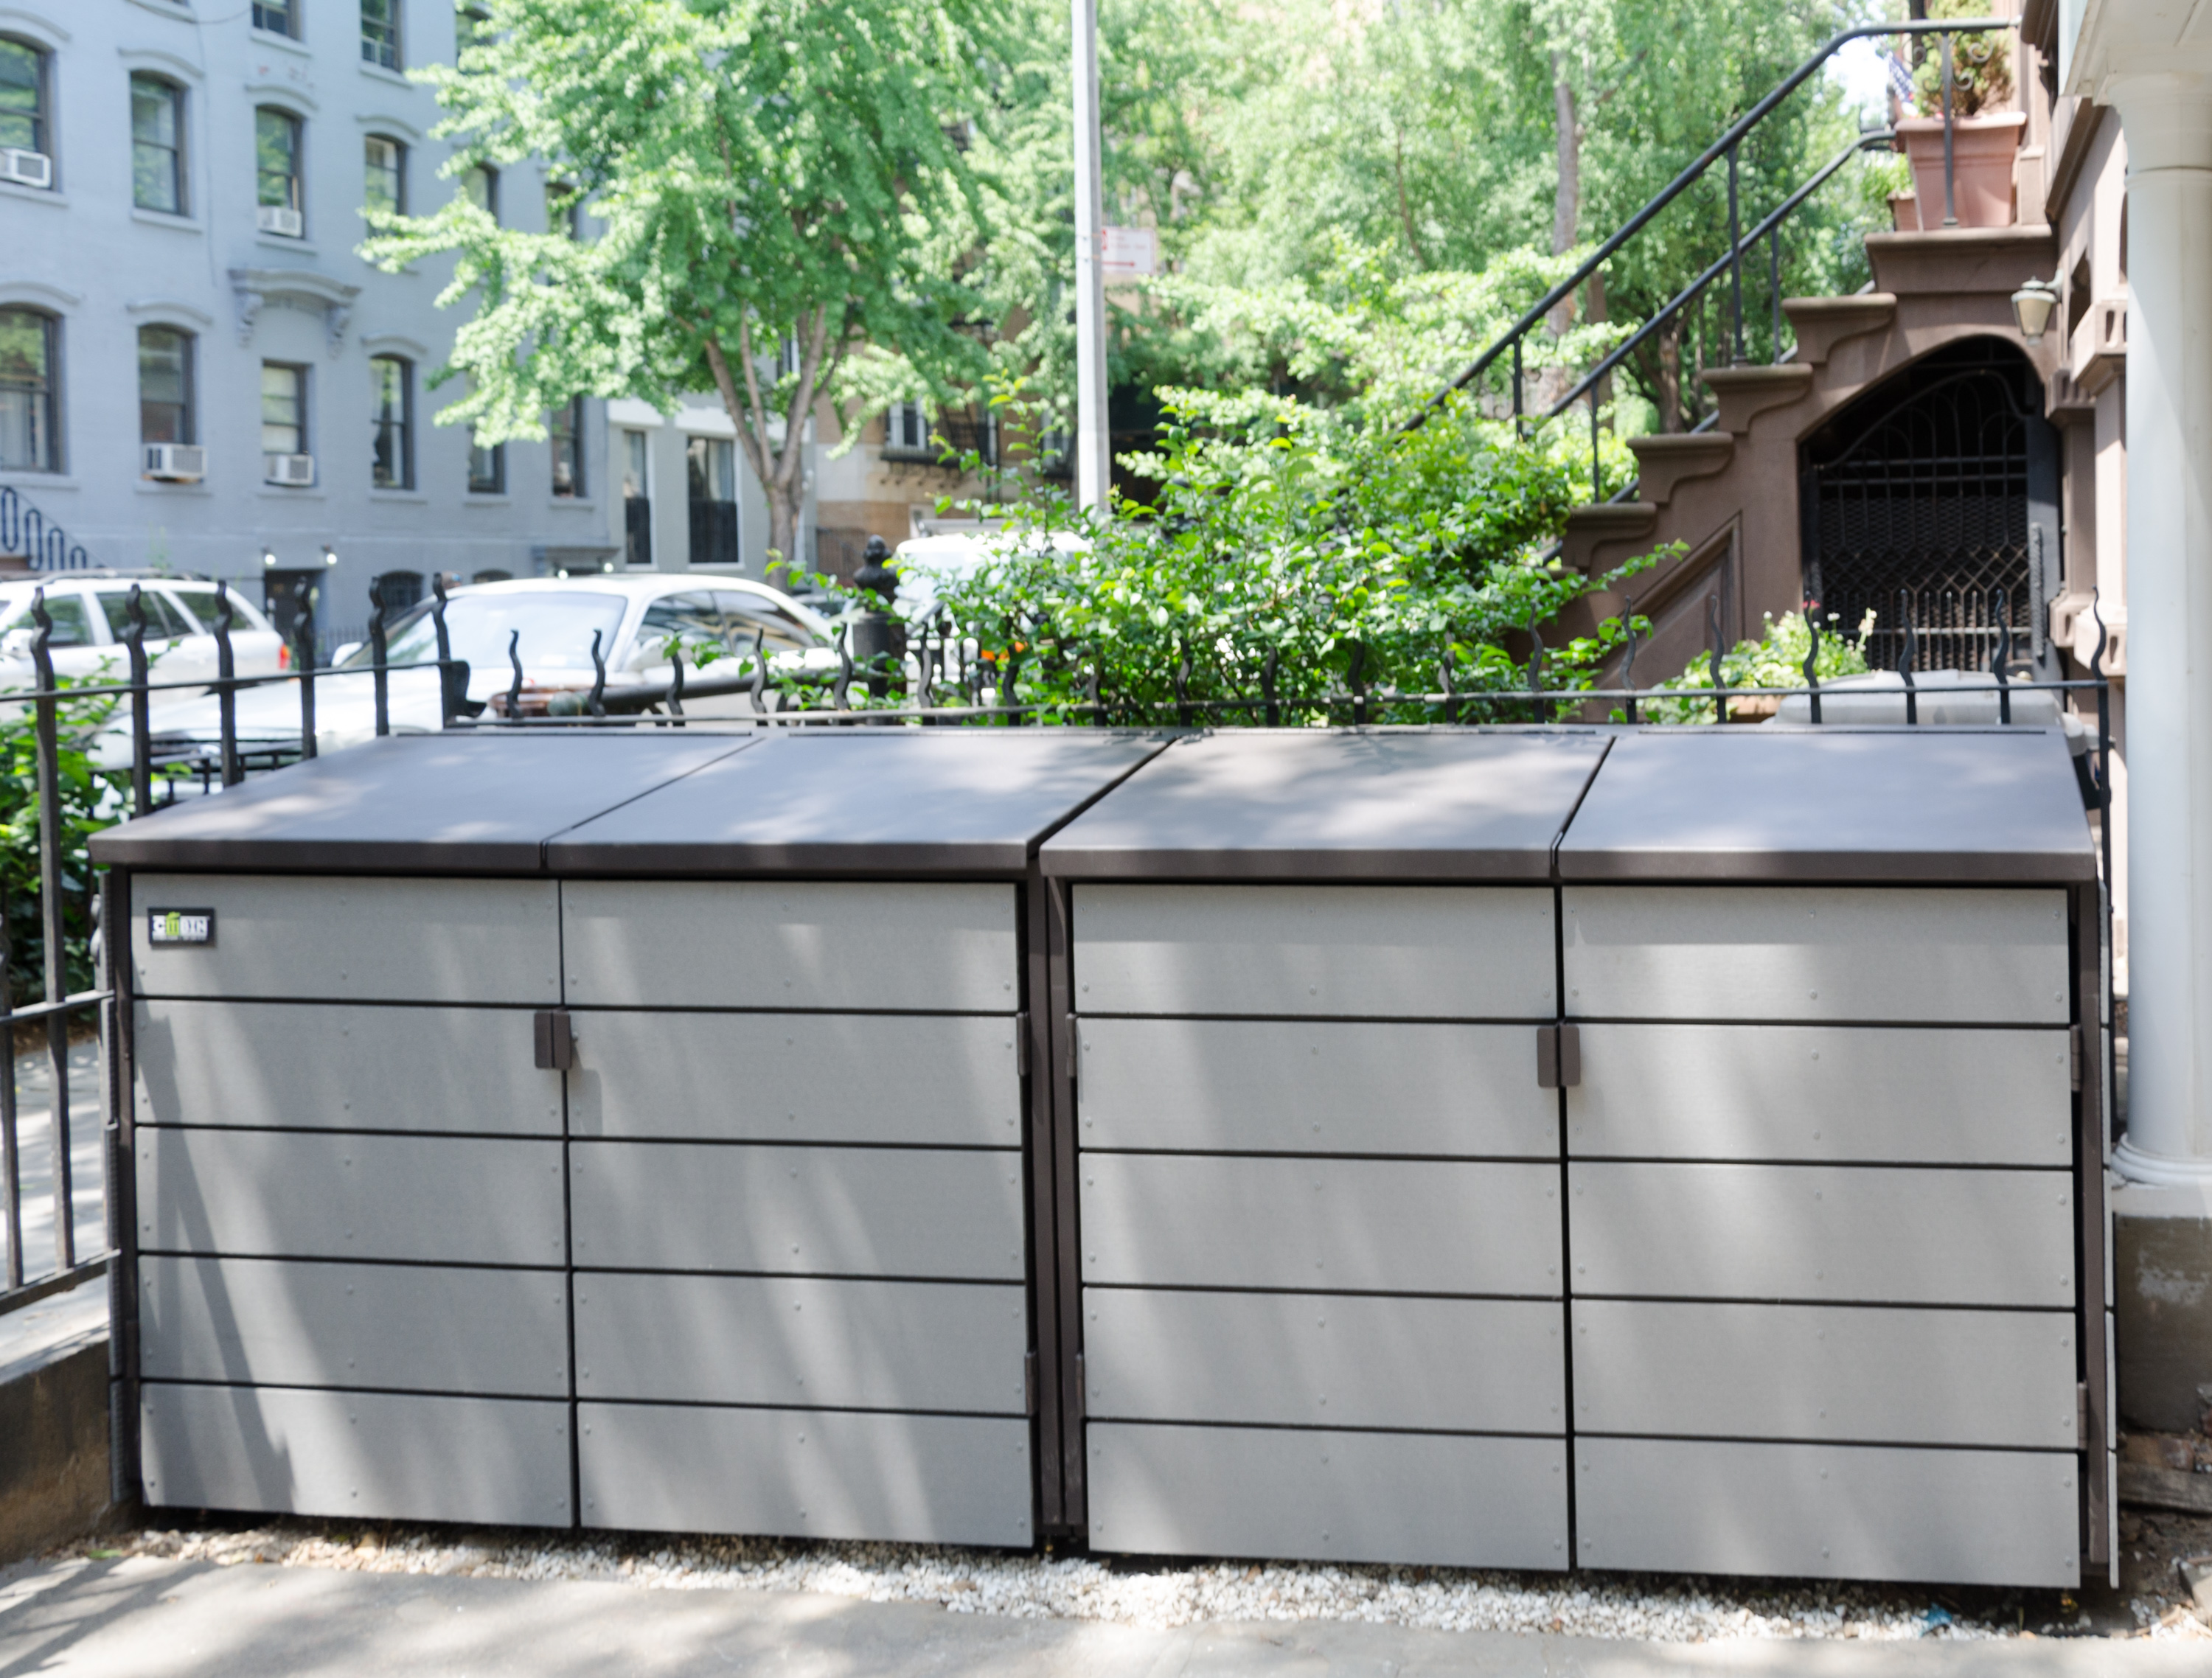 Outdoor Garbage Bins Ideas For Urban Front Yards Brownstoner